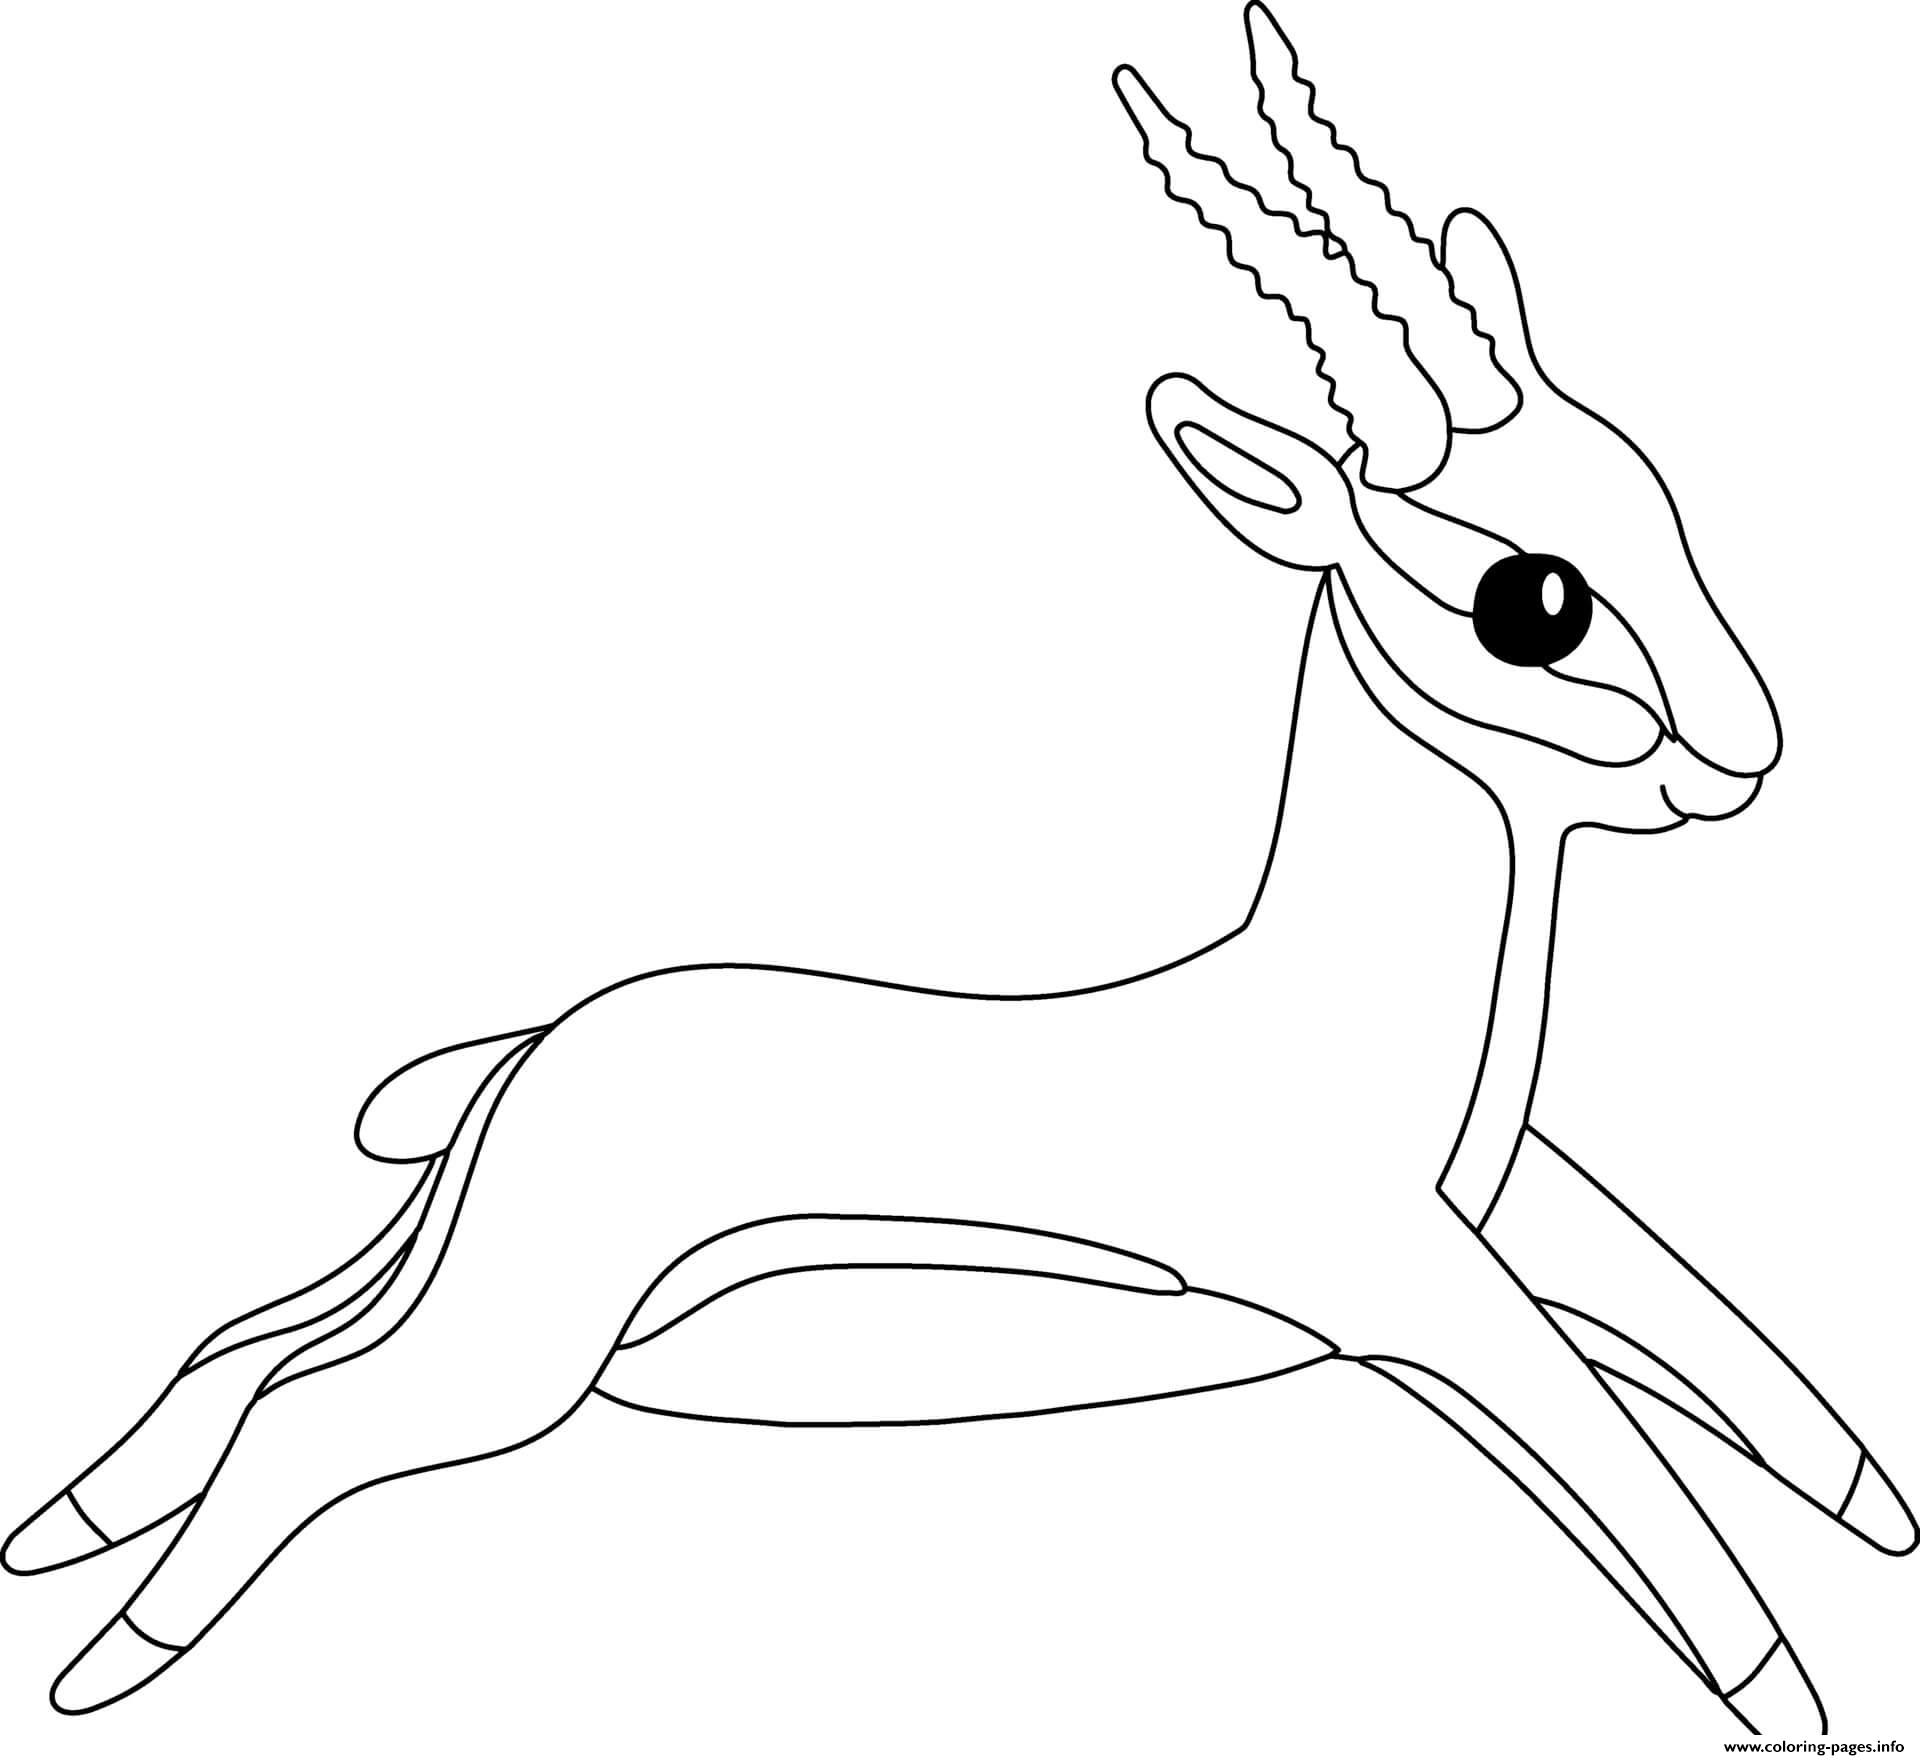 Antelope coloring